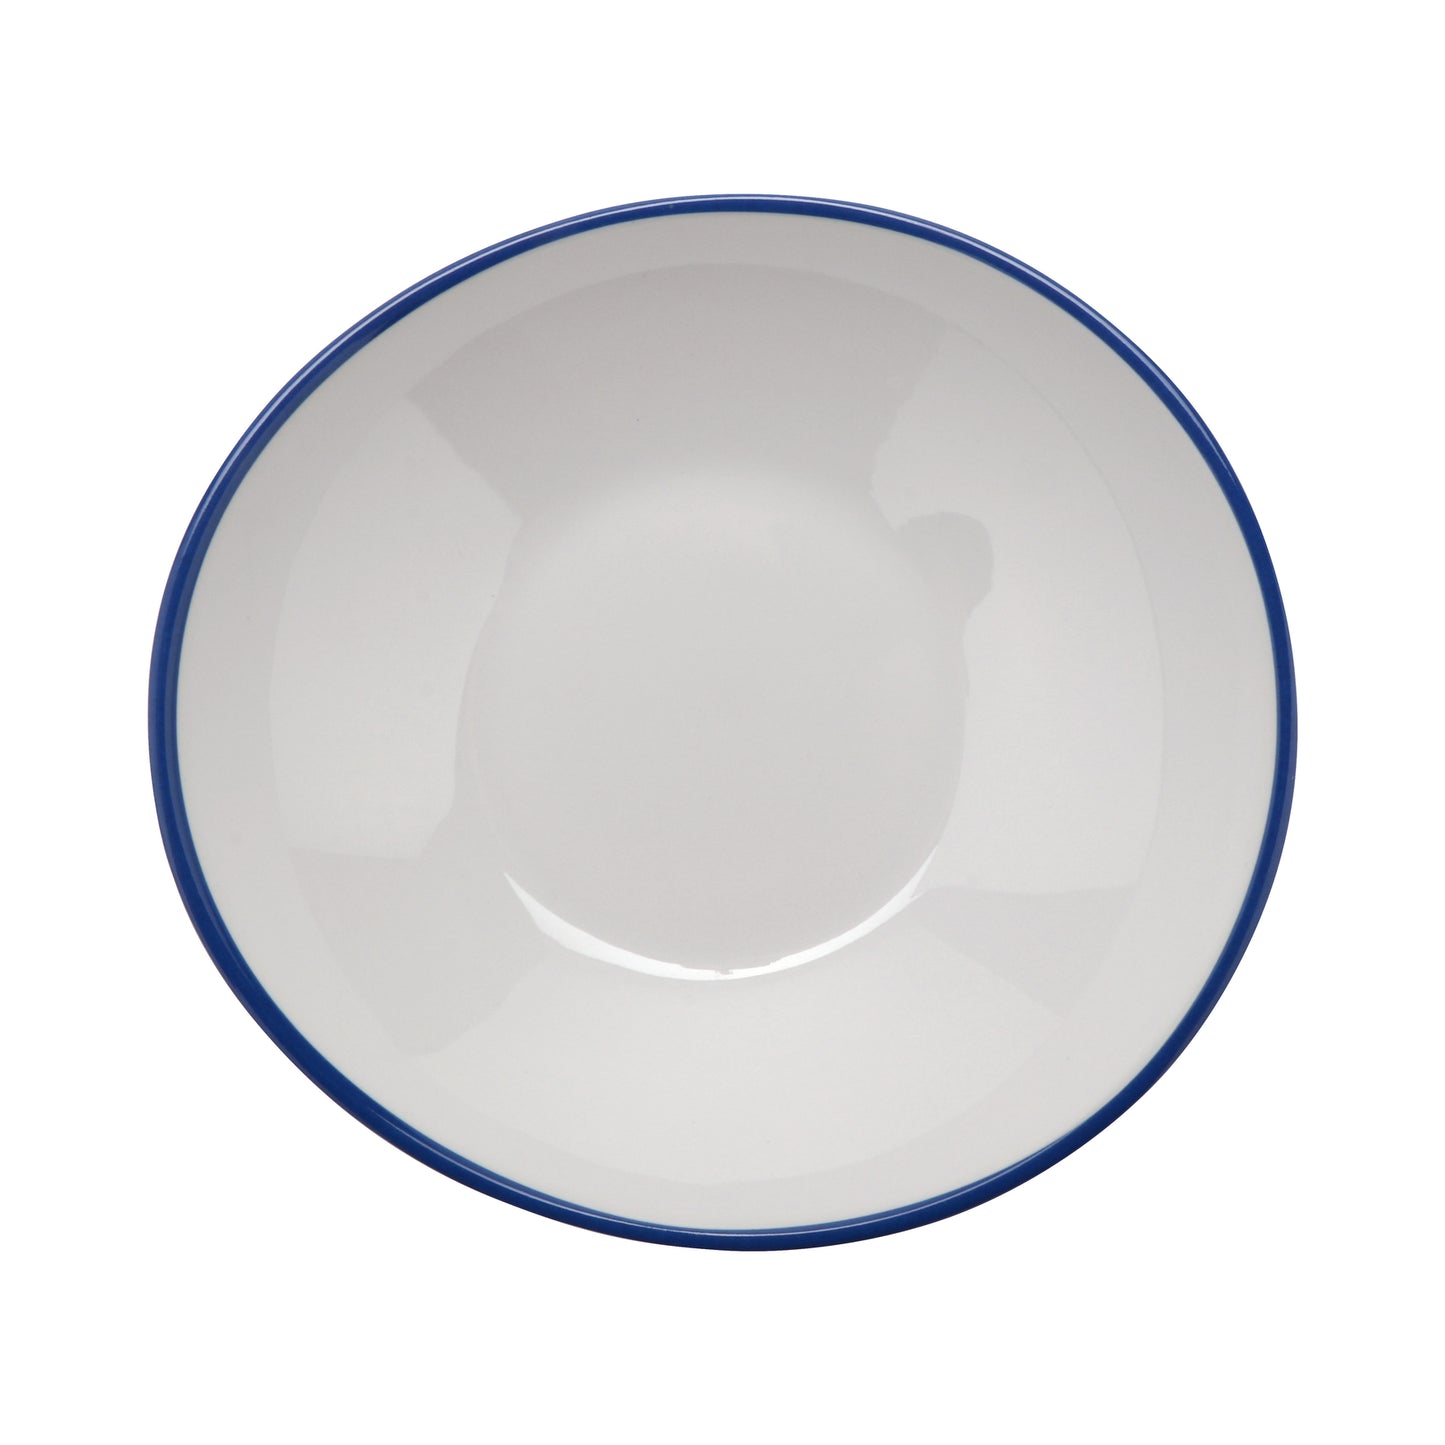 6 oz. White with Blue Trim, Enamelware Melamine Shallow Bowl, 8 oz. rim-full, 5.75" x 5.25", 1.25" deep, G.E.T. Settlement Bistro (12 Pack)